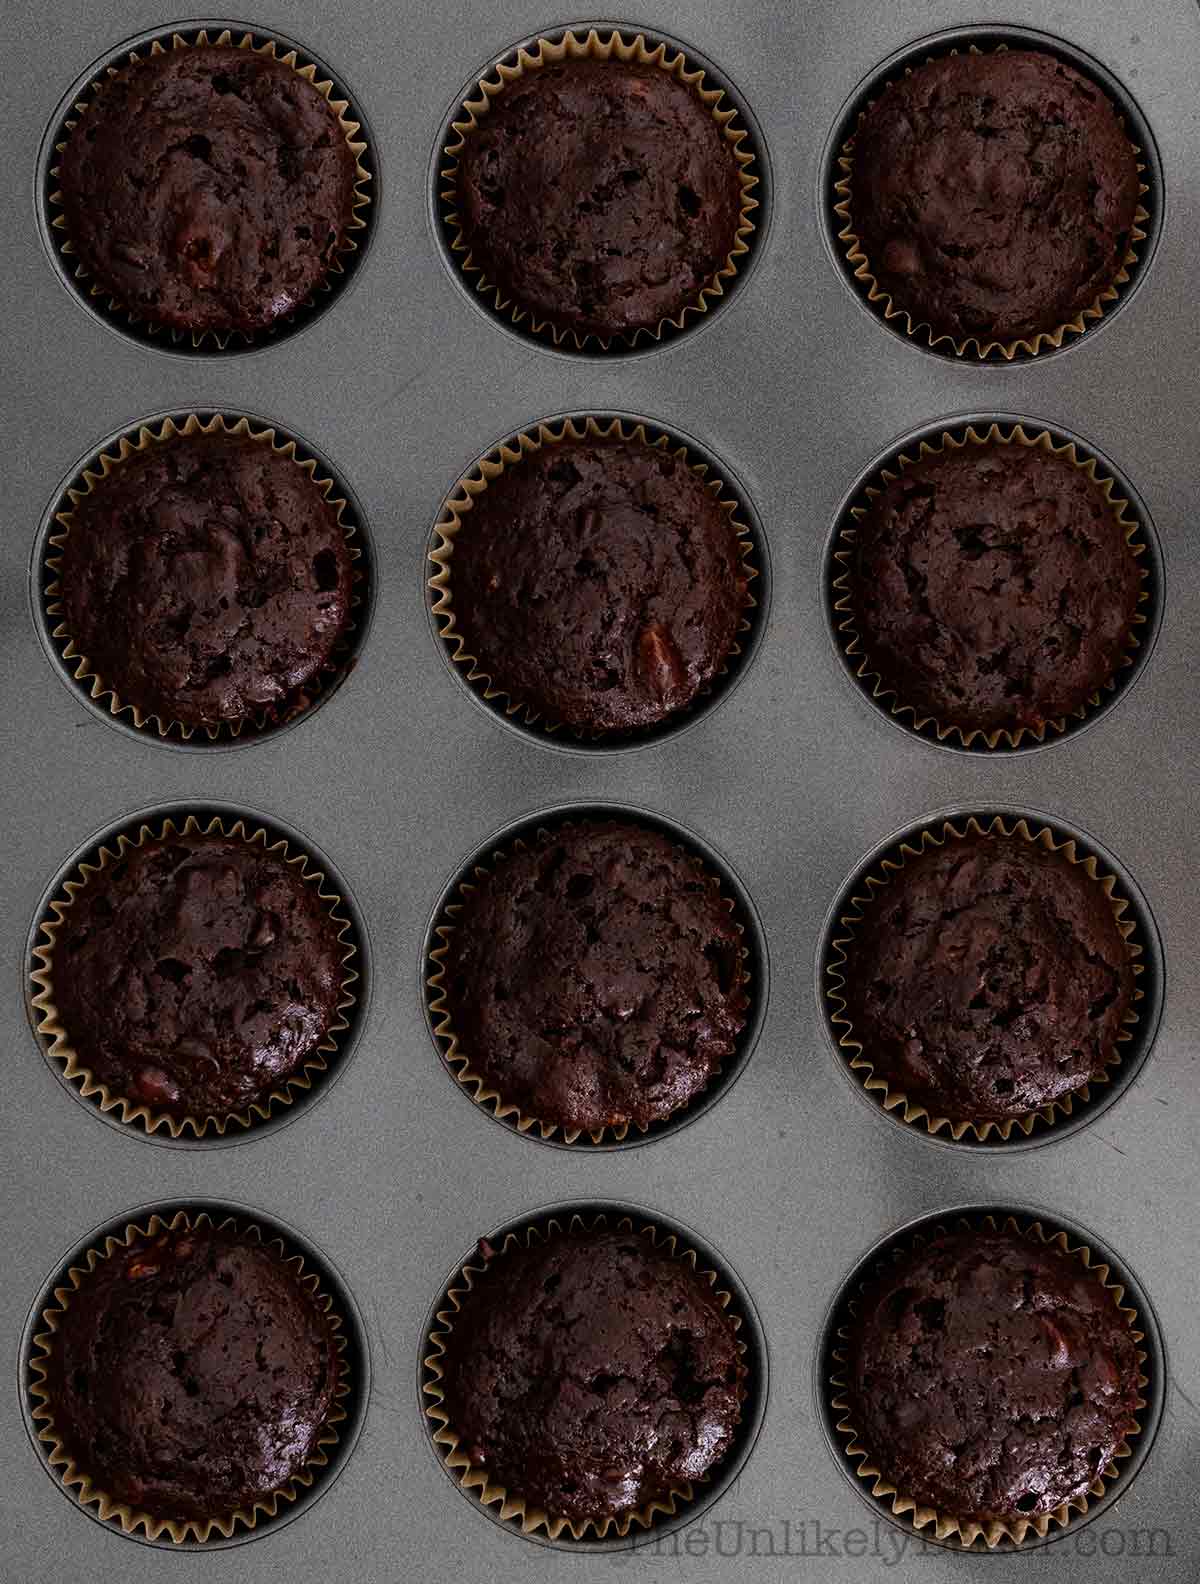 Freshly baked chocolate ricotta muffins